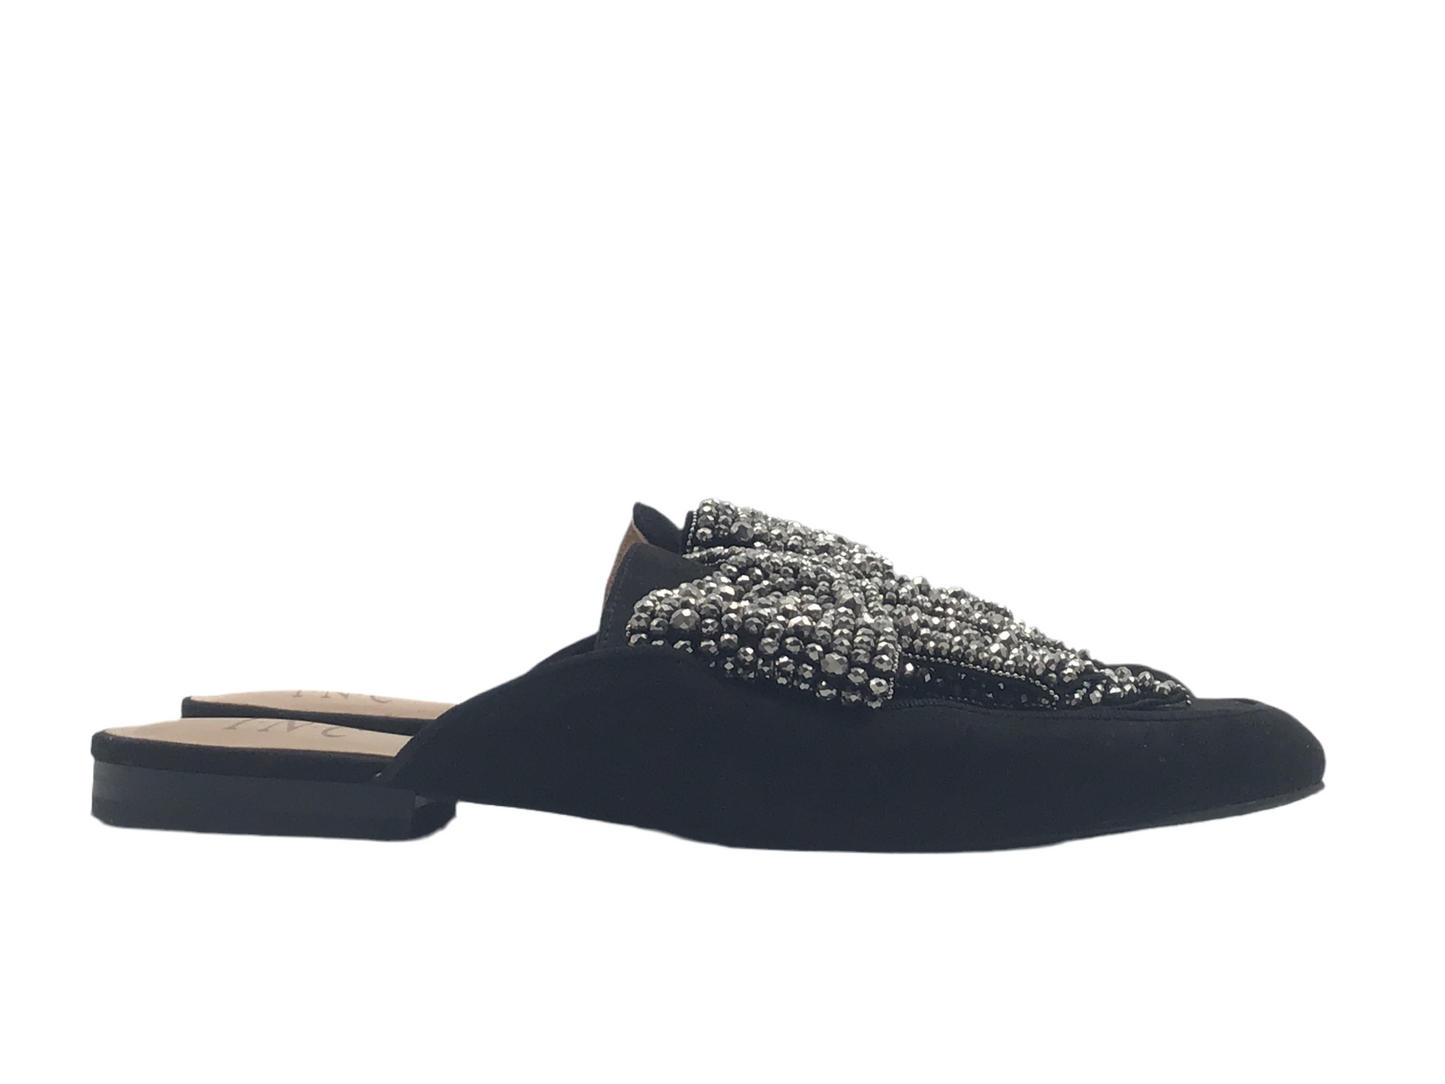 Black & Silver Shoes Flats Inc, Size 7.5